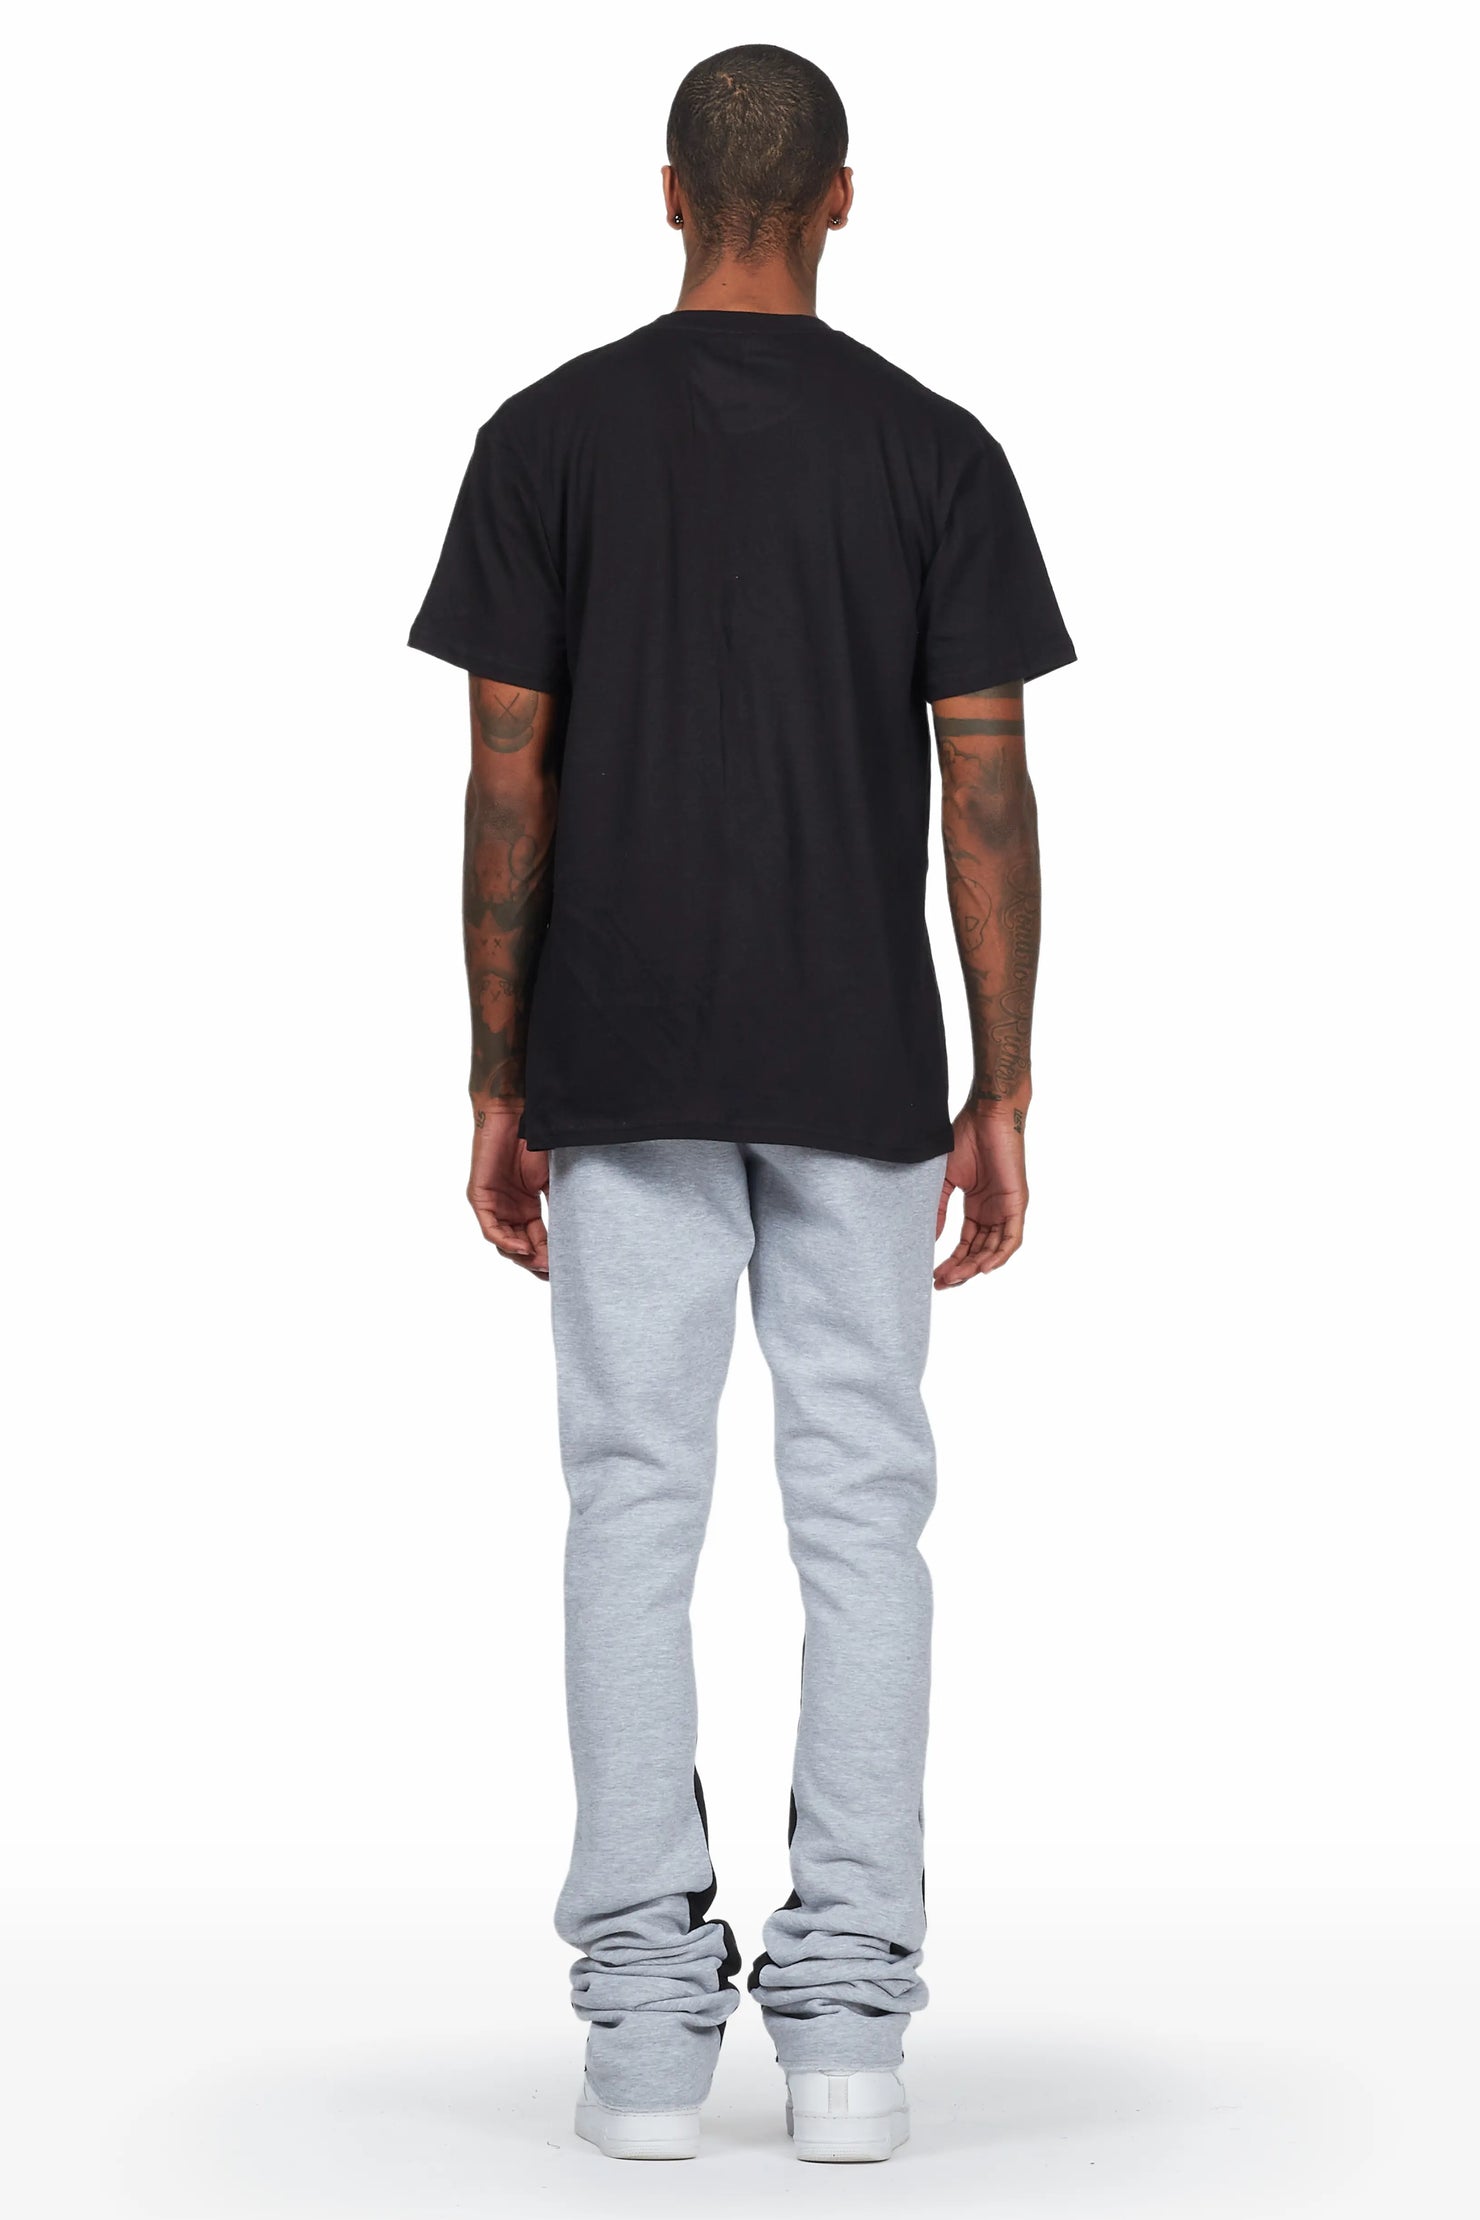 Weave Black/Grey T-Shirt Super Stacked Flare Track Set